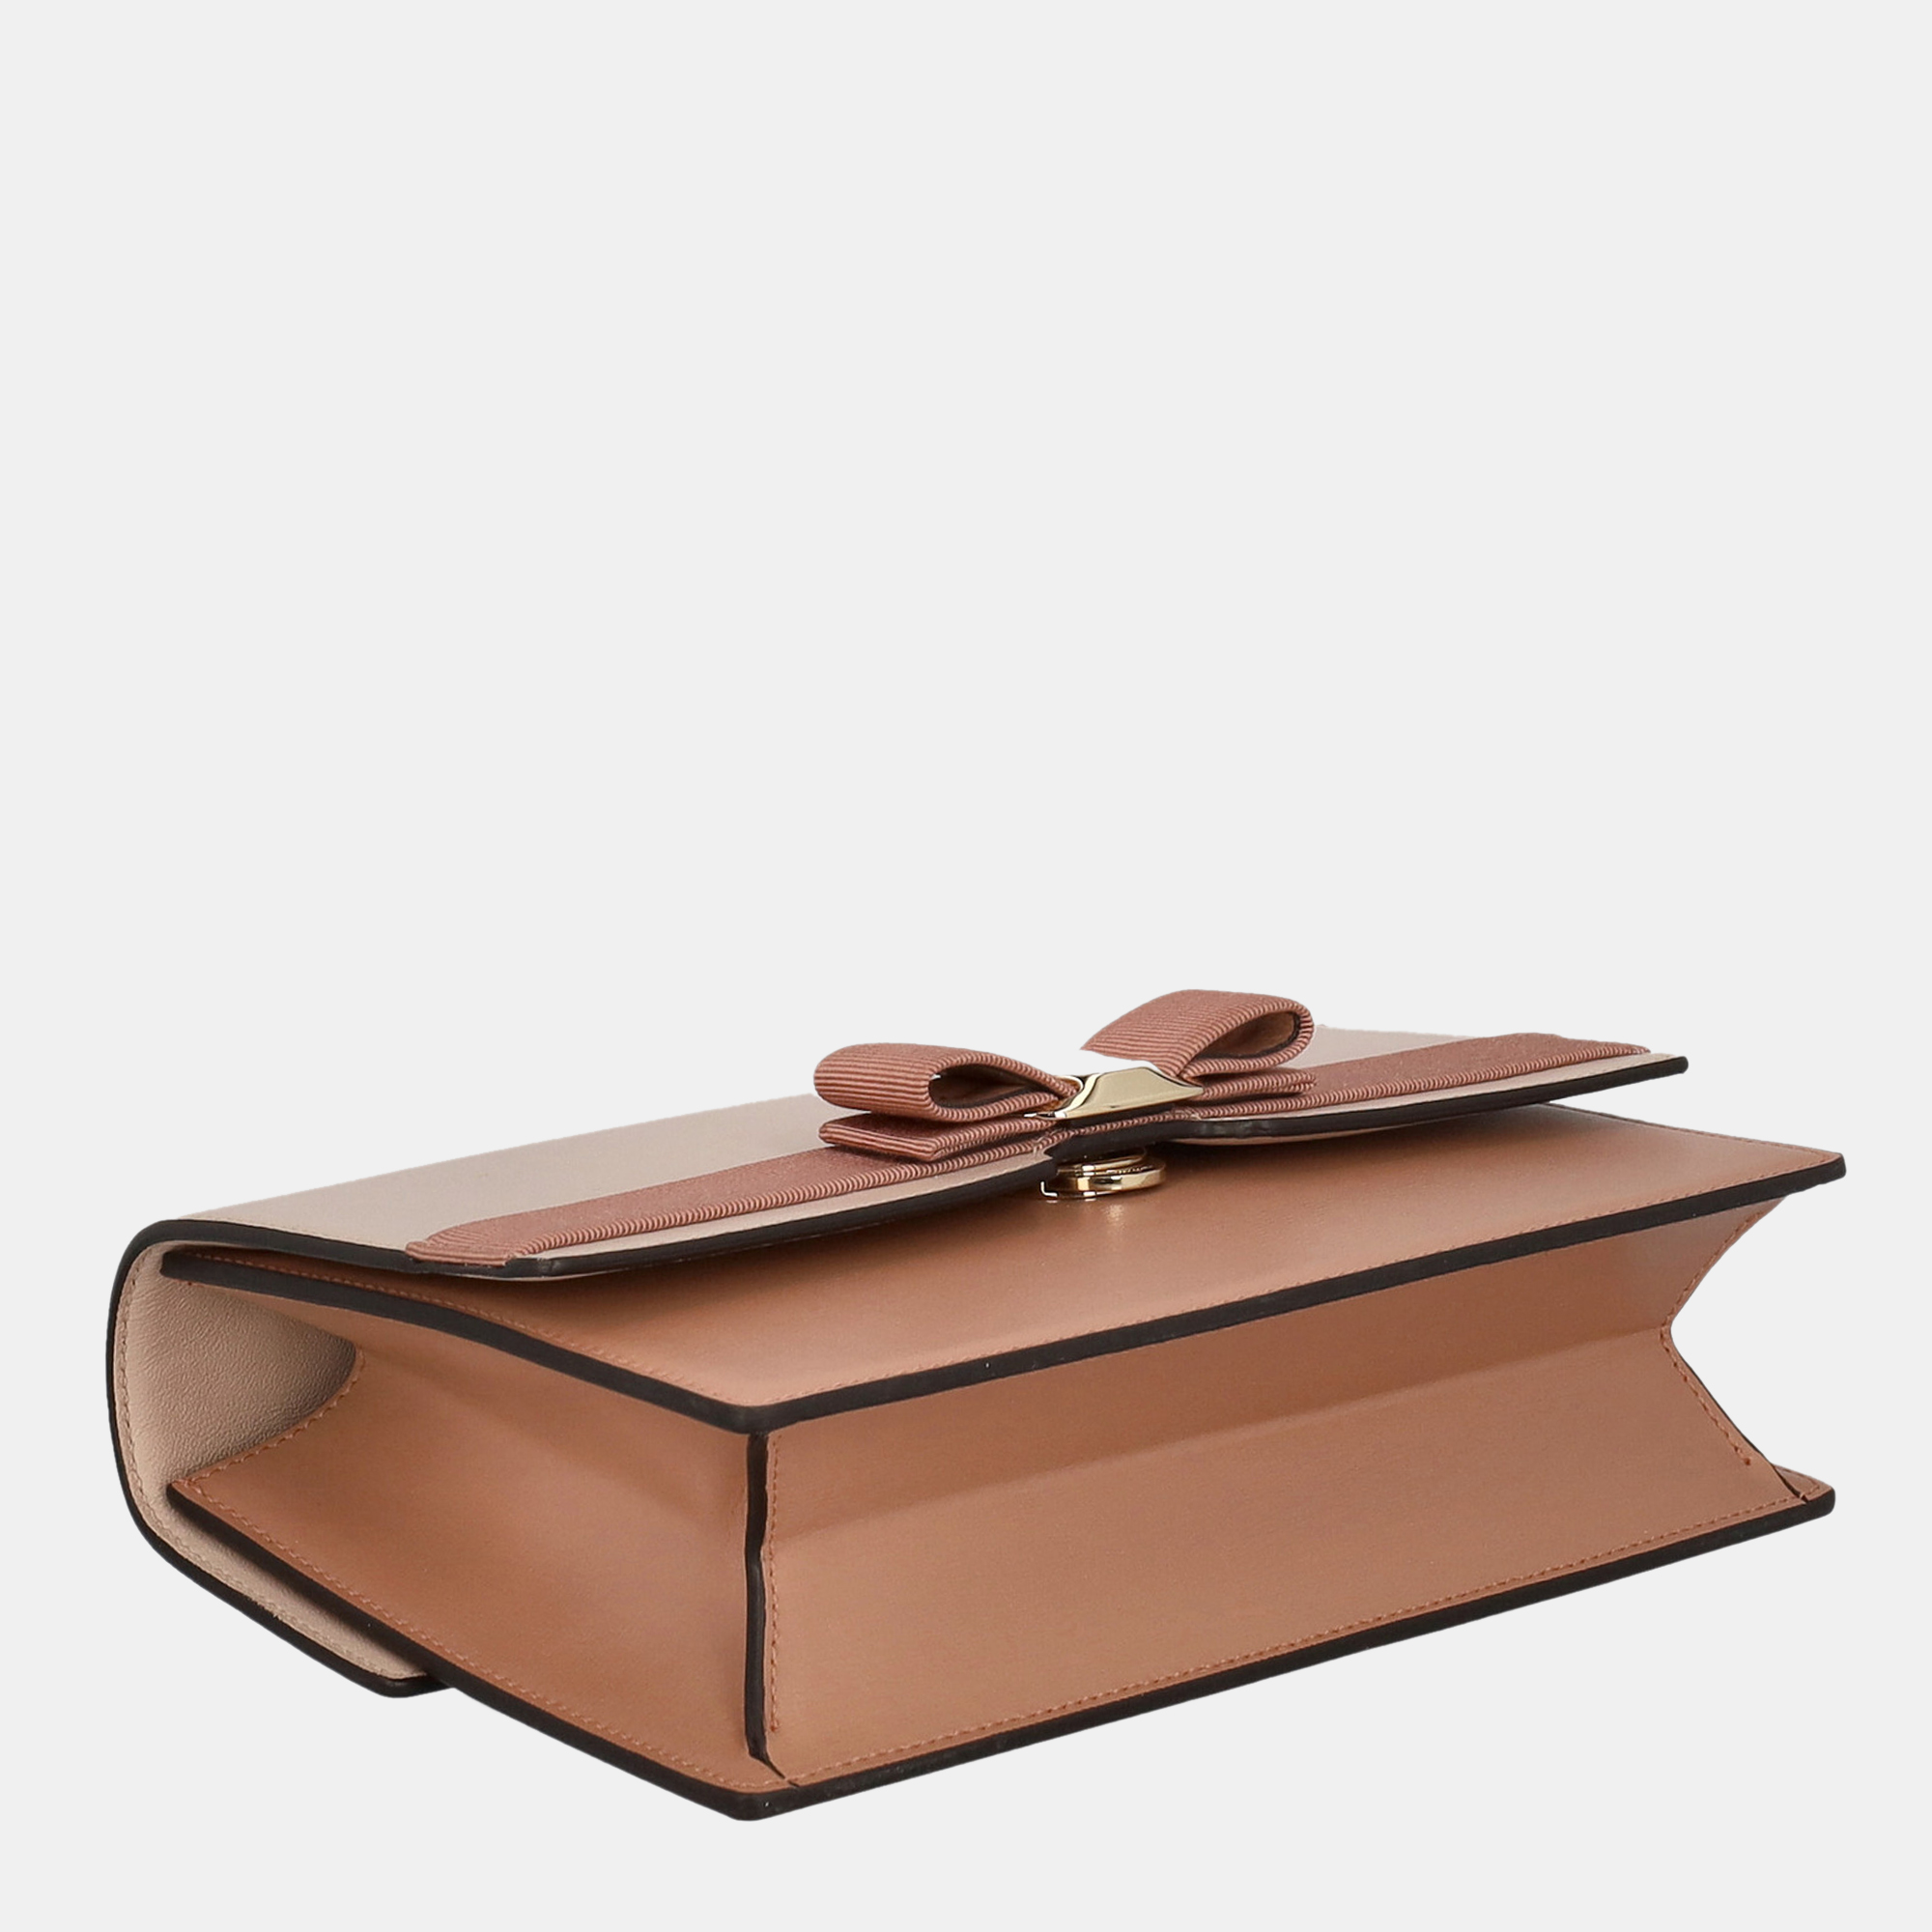 Salvatore Ferragamo  Women's Leather Hobo Bag - Beige - One Size